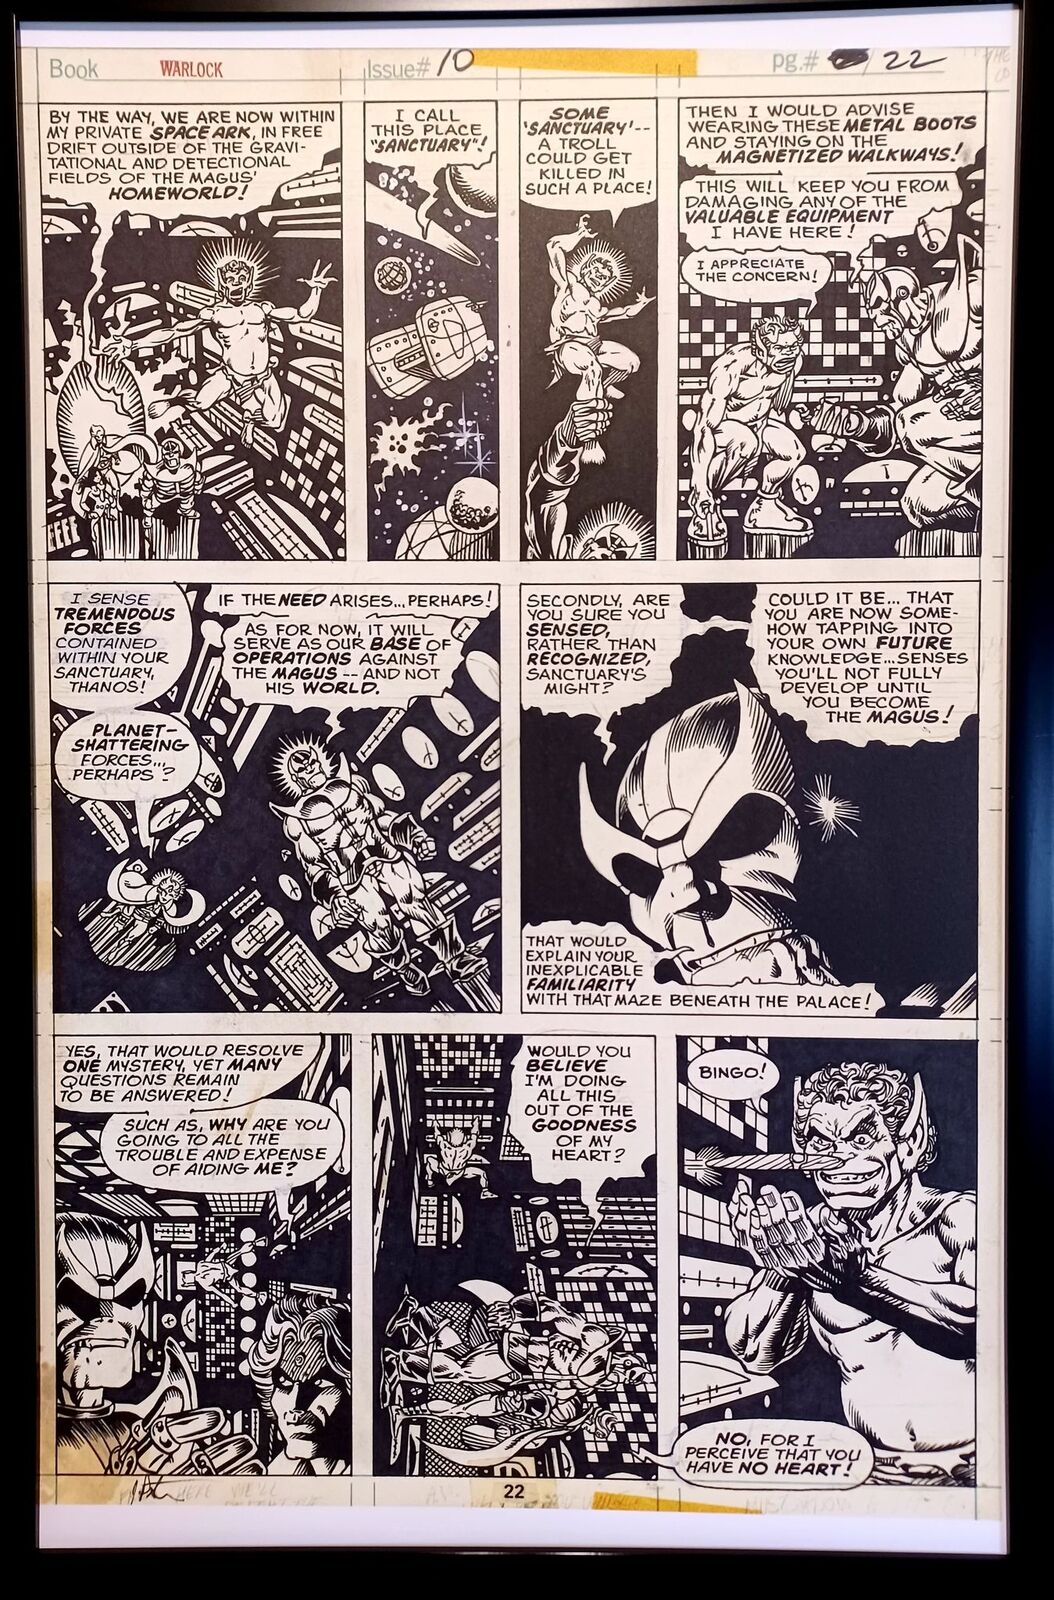 Warlock #10 pg. 22 w/ Thanos by Jim Starlin 11x17 FRAMED Original Art Print Marv